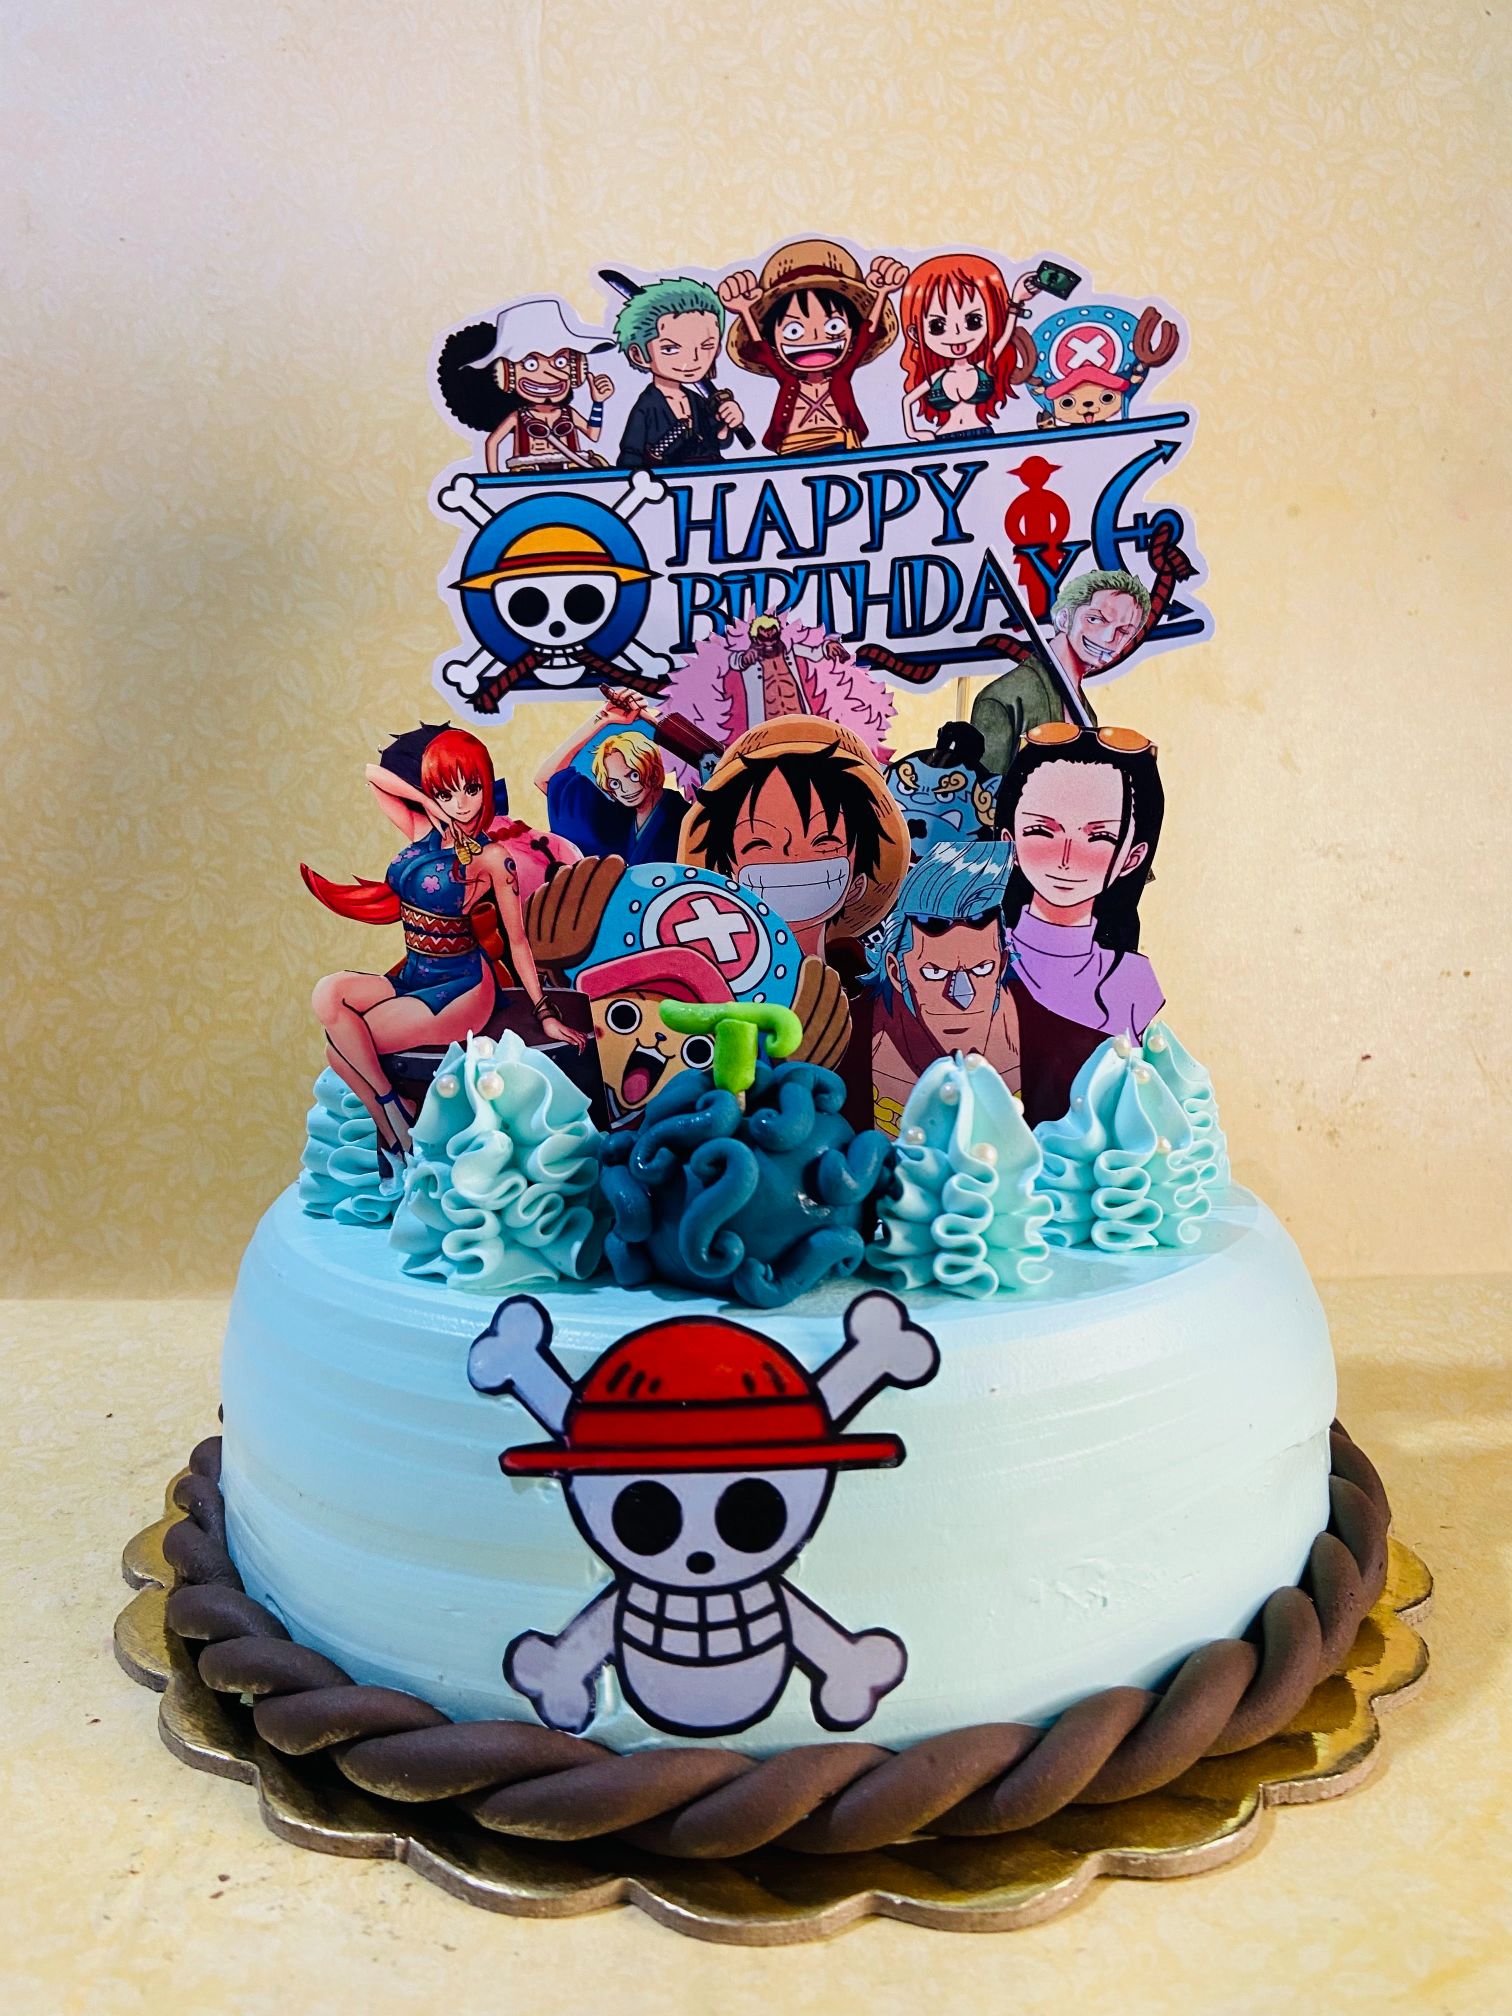 Making a Haikyu themed cake / Anime cake @ArtCakes - YouTube